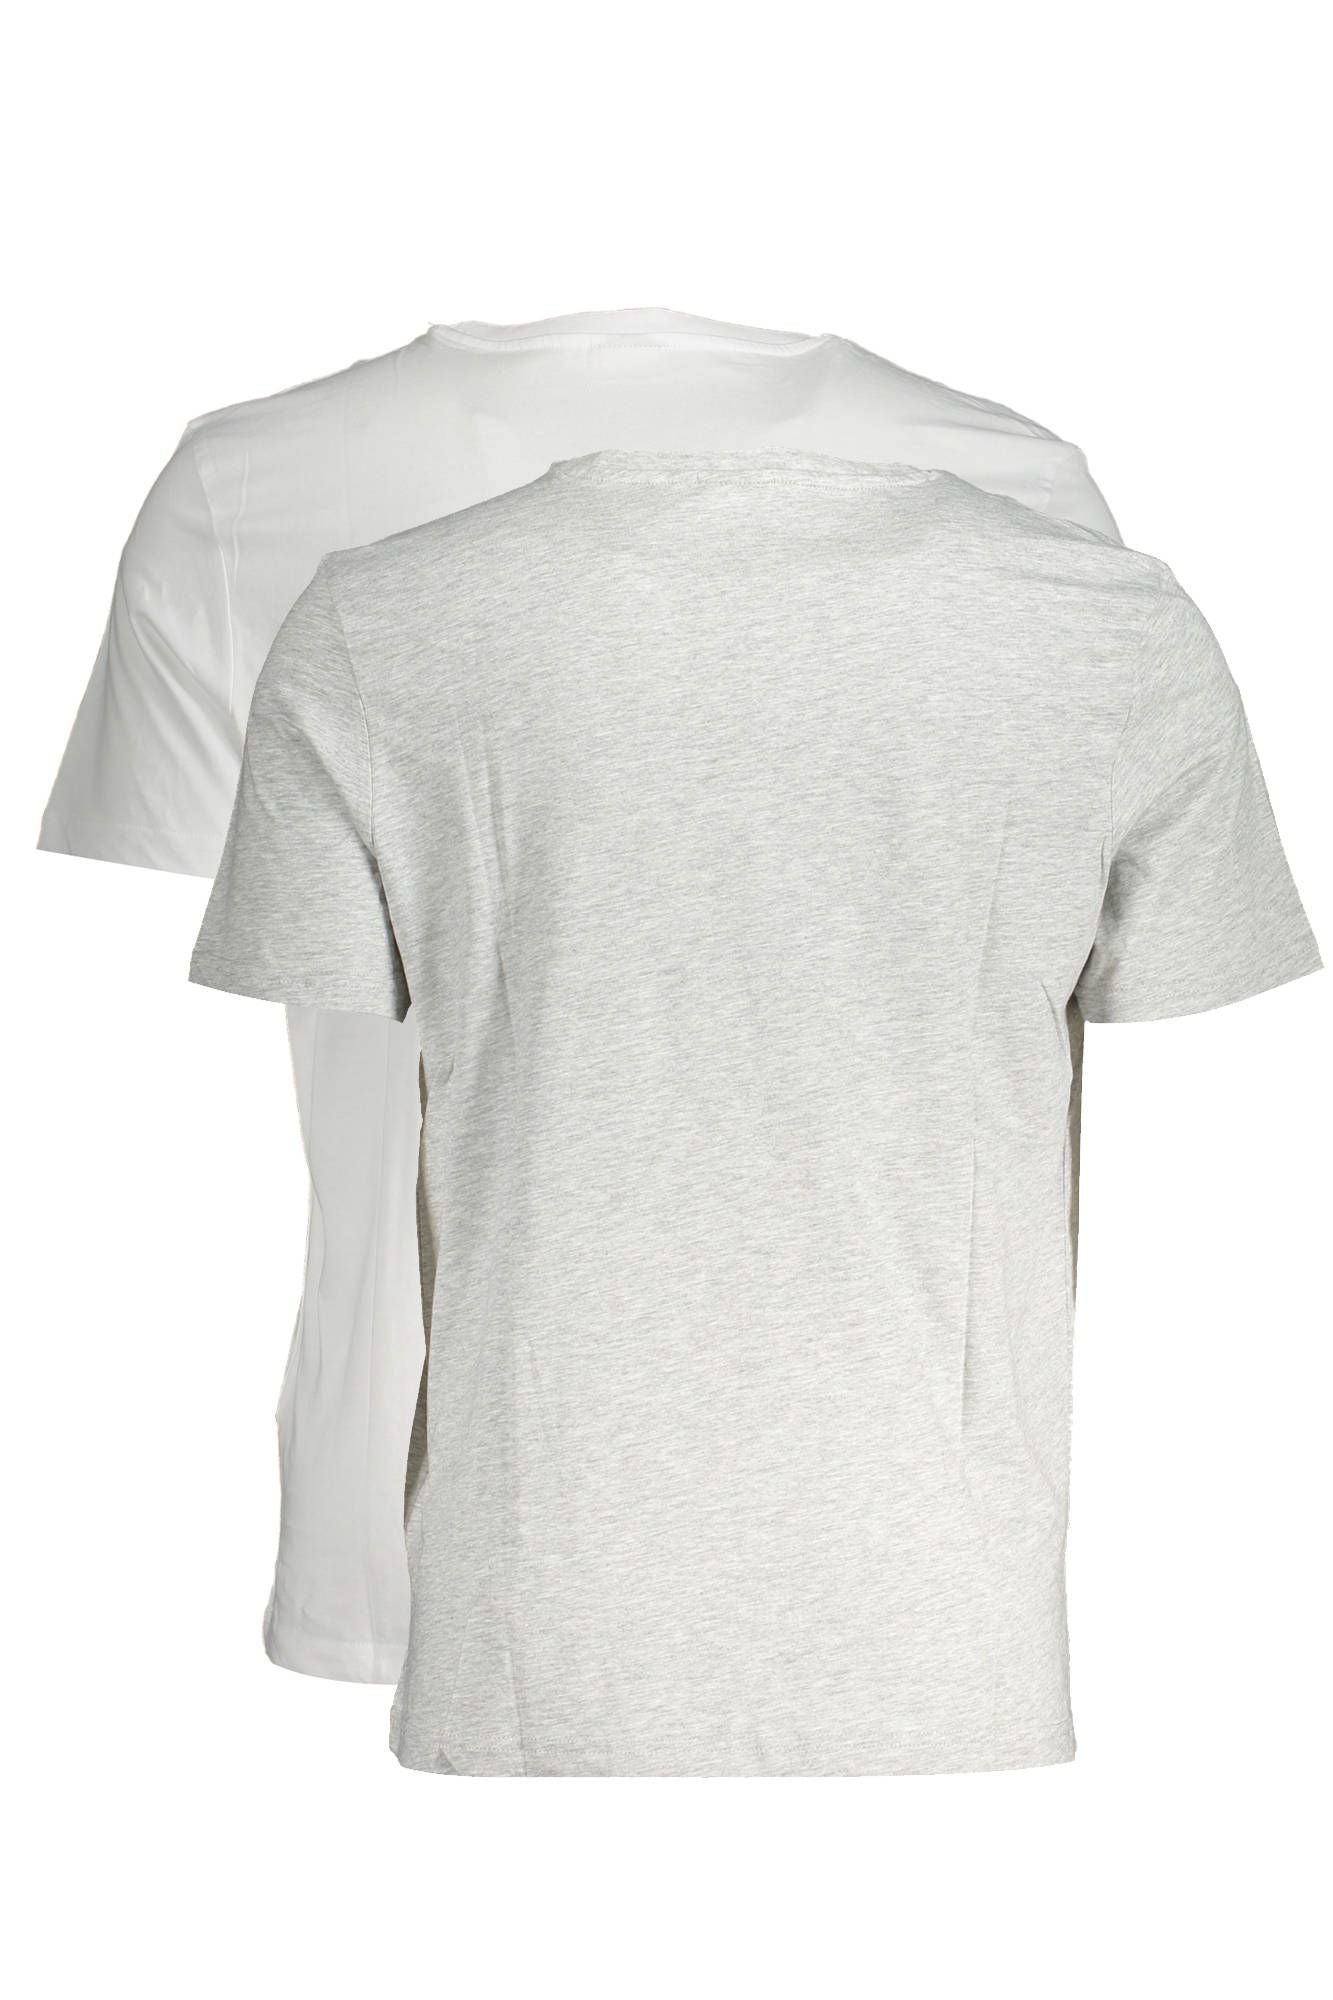 Fila Gray Cotton T-Shirt